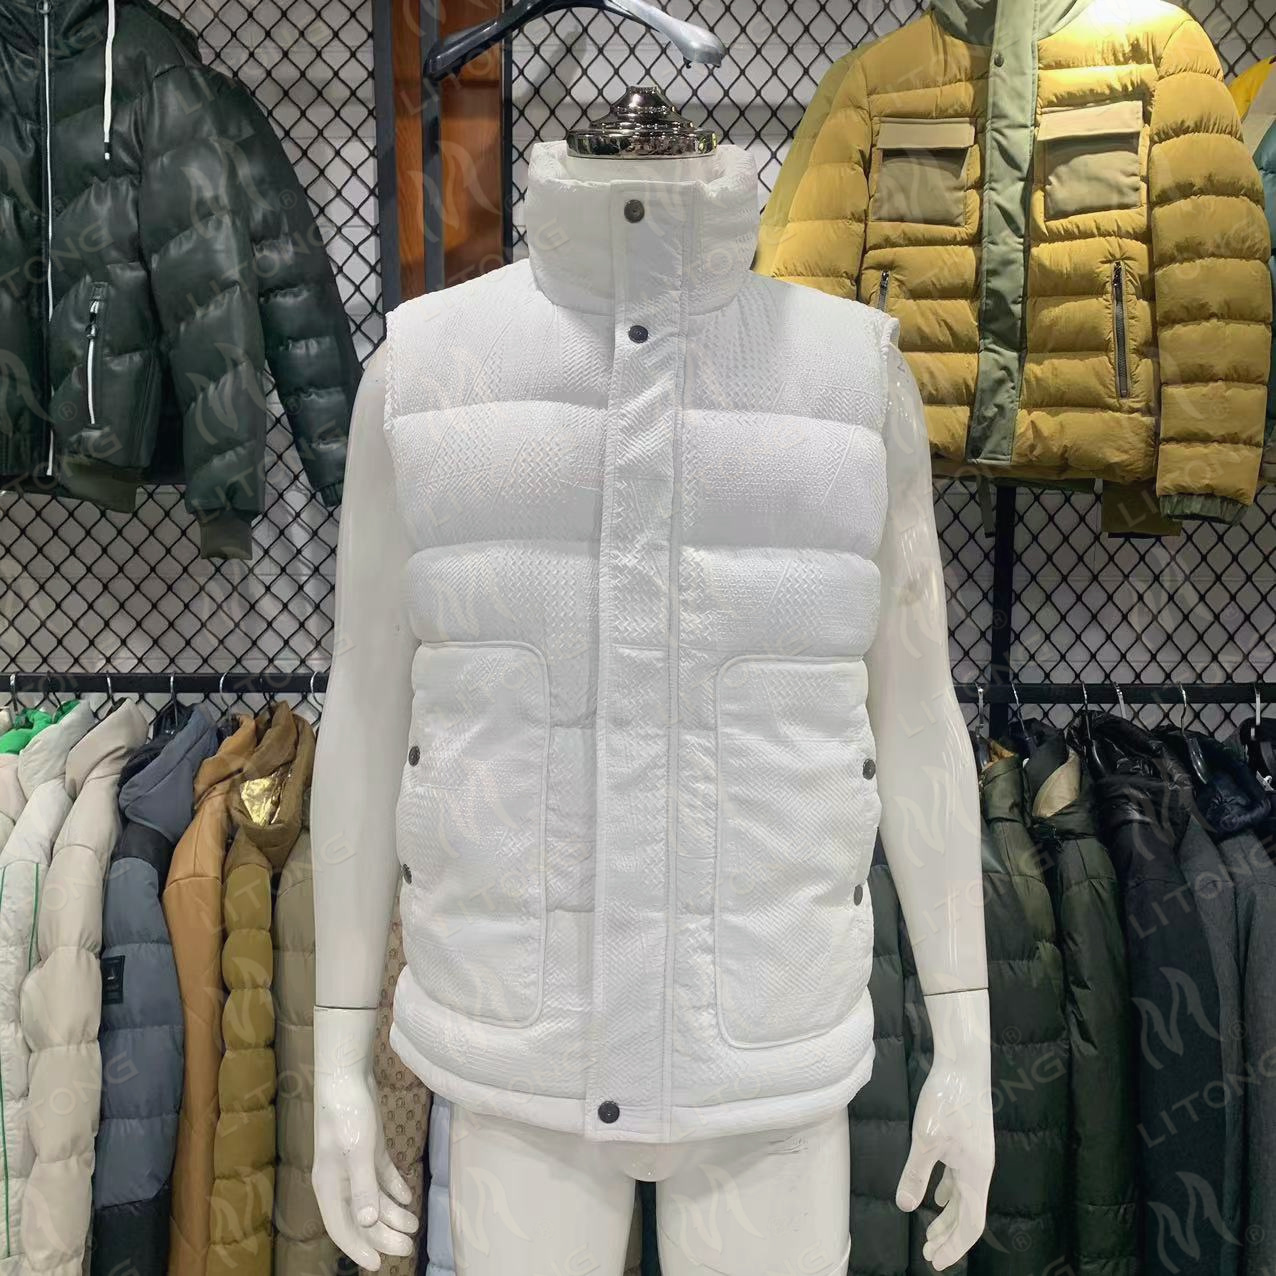 Men's winter puffy vest